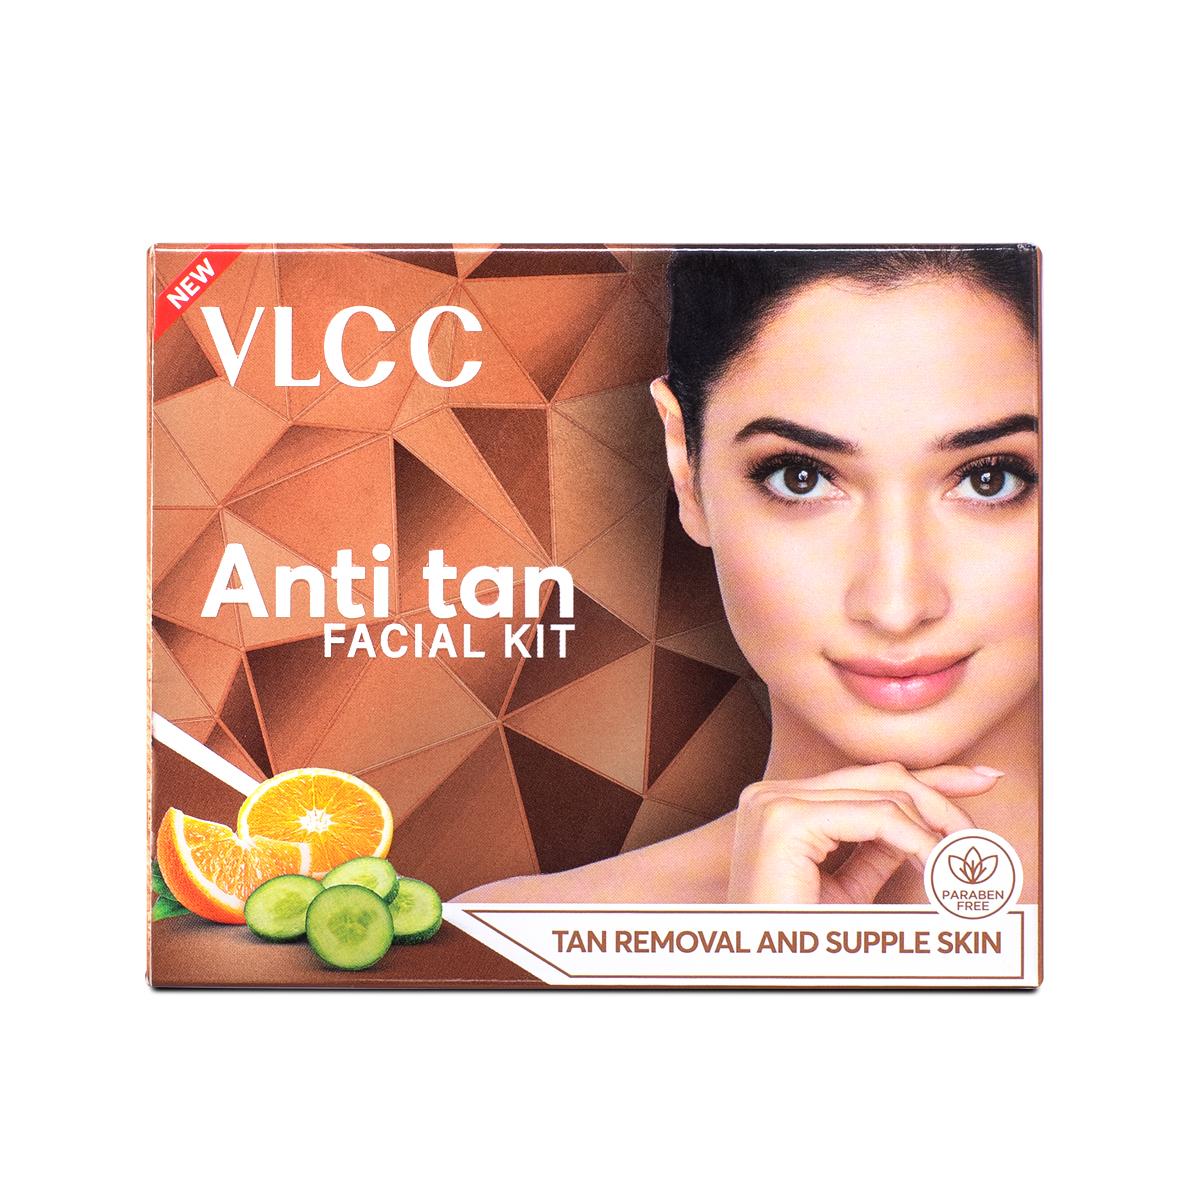 VLCC Anti Tan Single Facial Kit - Restore Radiance and Combat Sun Damage